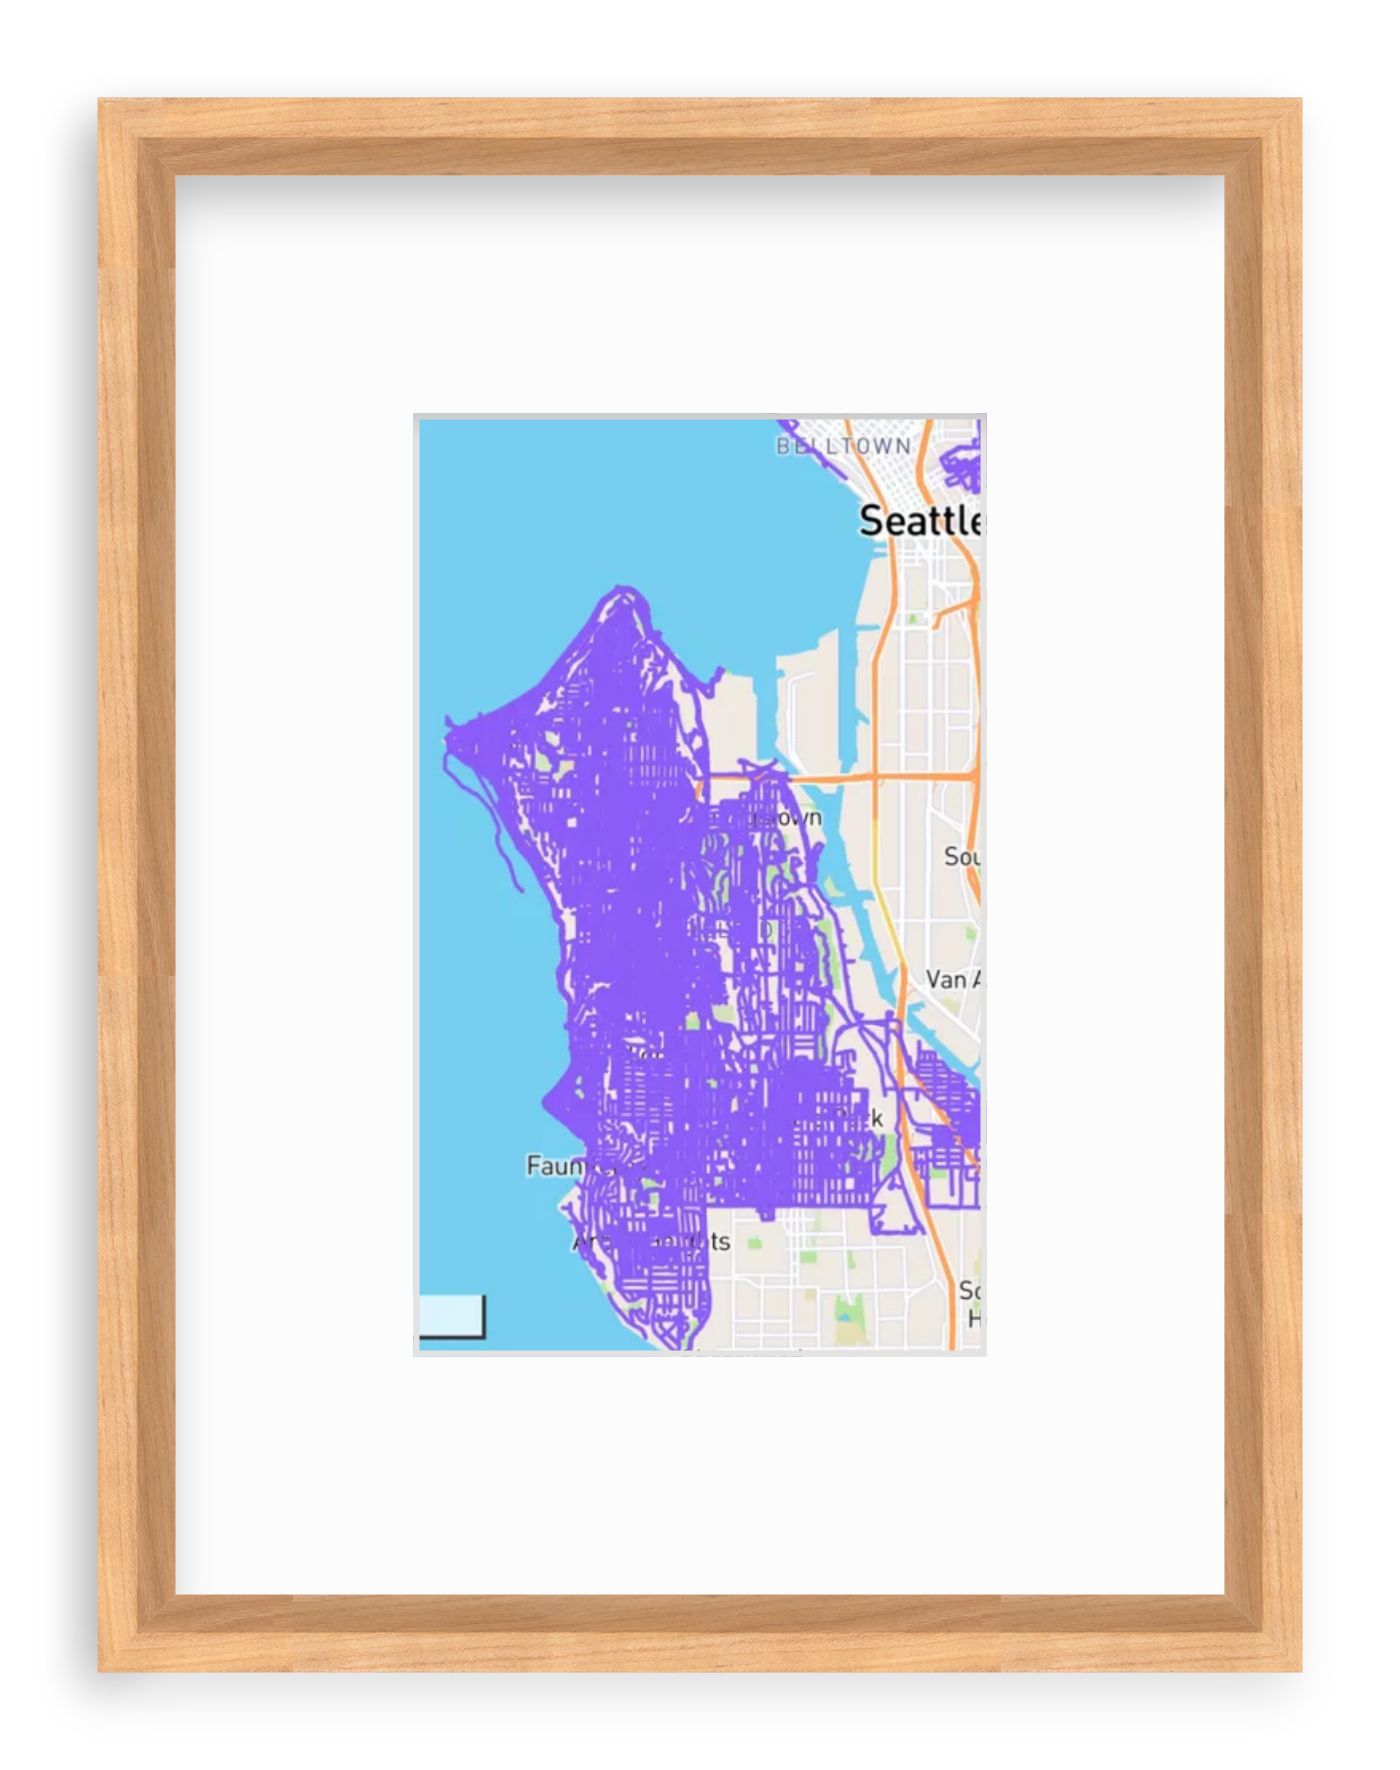 framed photo of running map